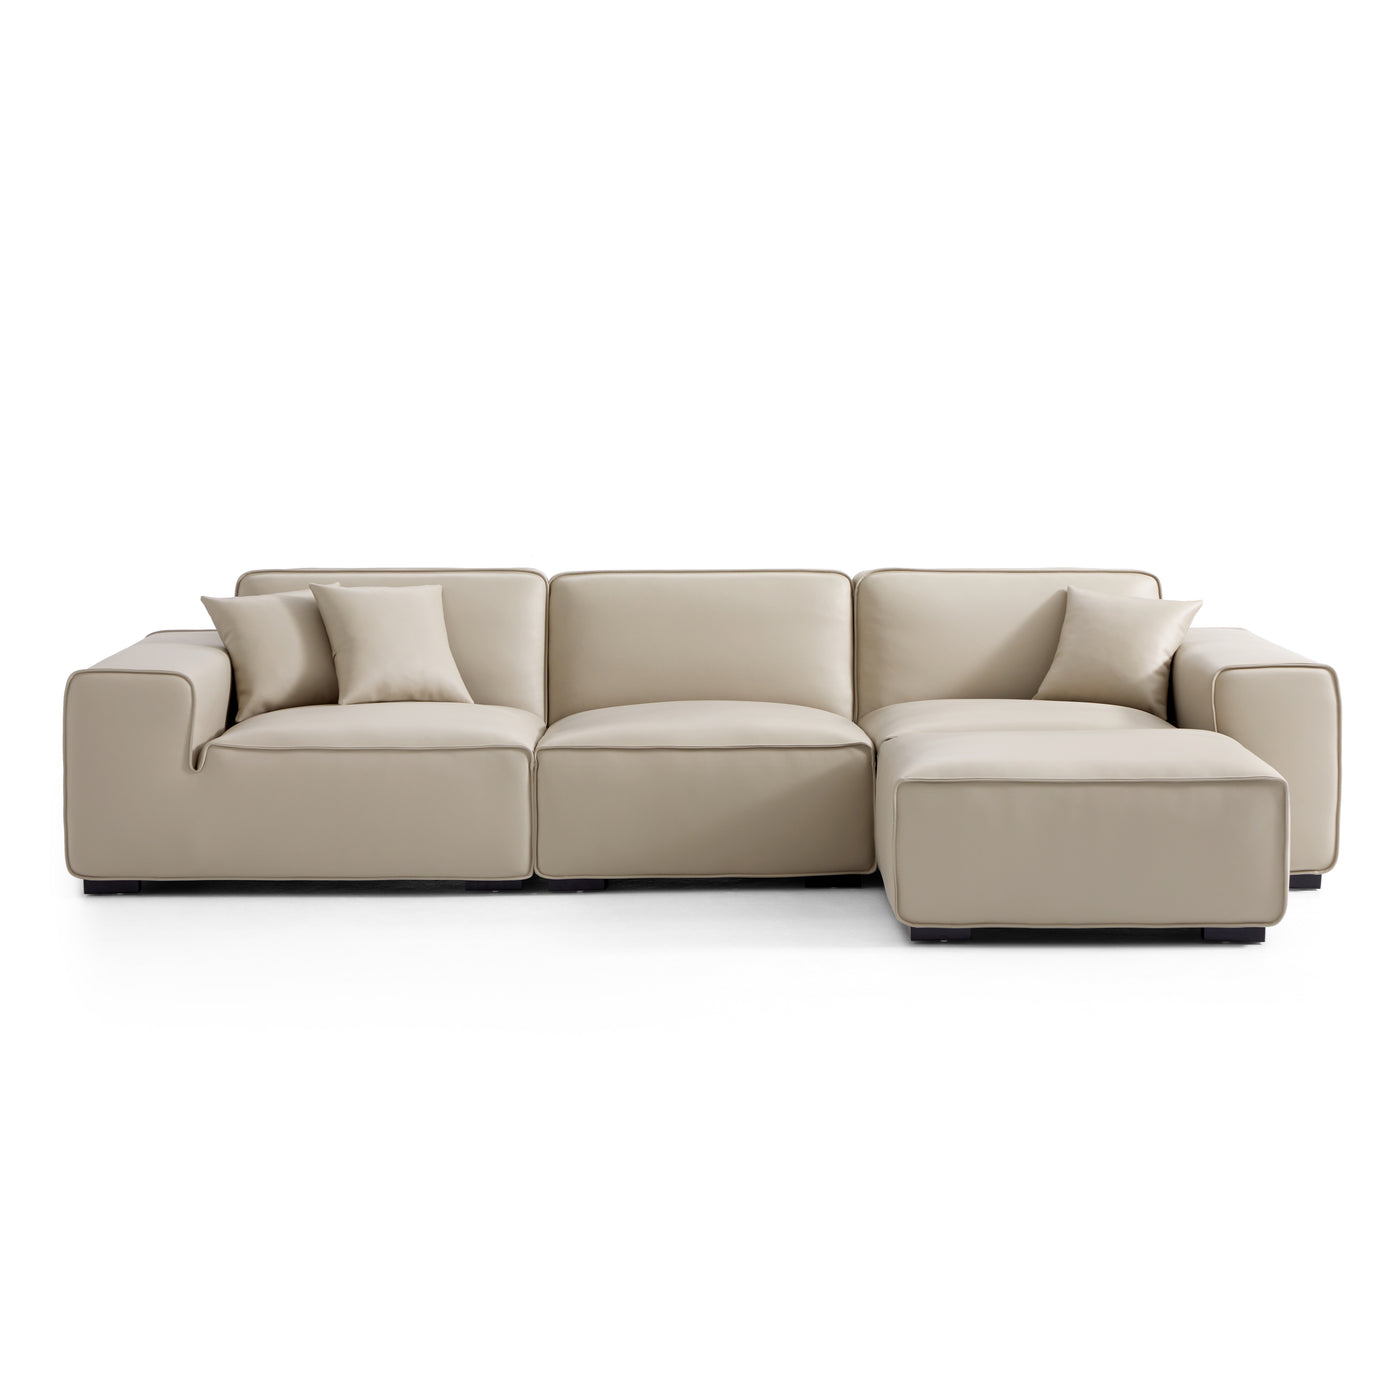 Domus Modular Dark Gray Leather Sofa and Ottoman-Beige